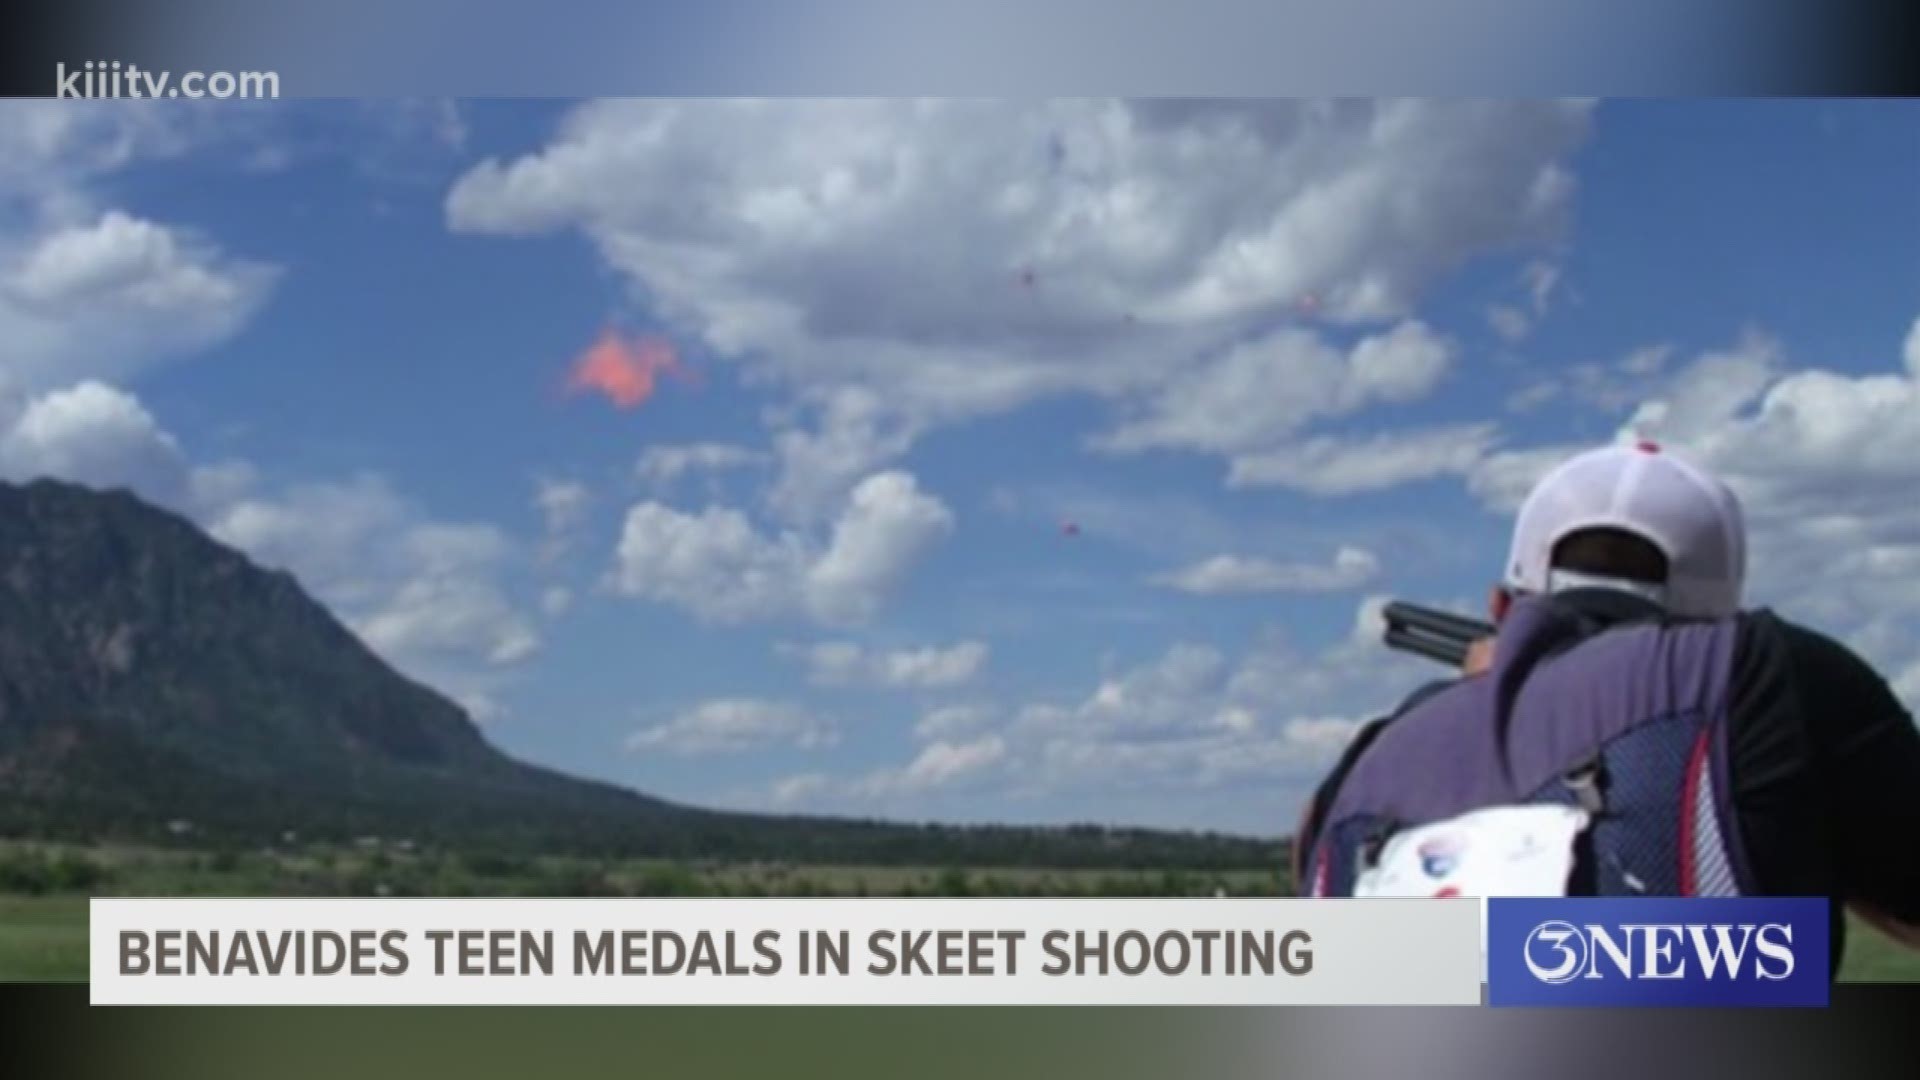 17-year-old David Carlos Garza won the silver medal for skeet shooting at the National Junior Olympics in Colorado Springs.